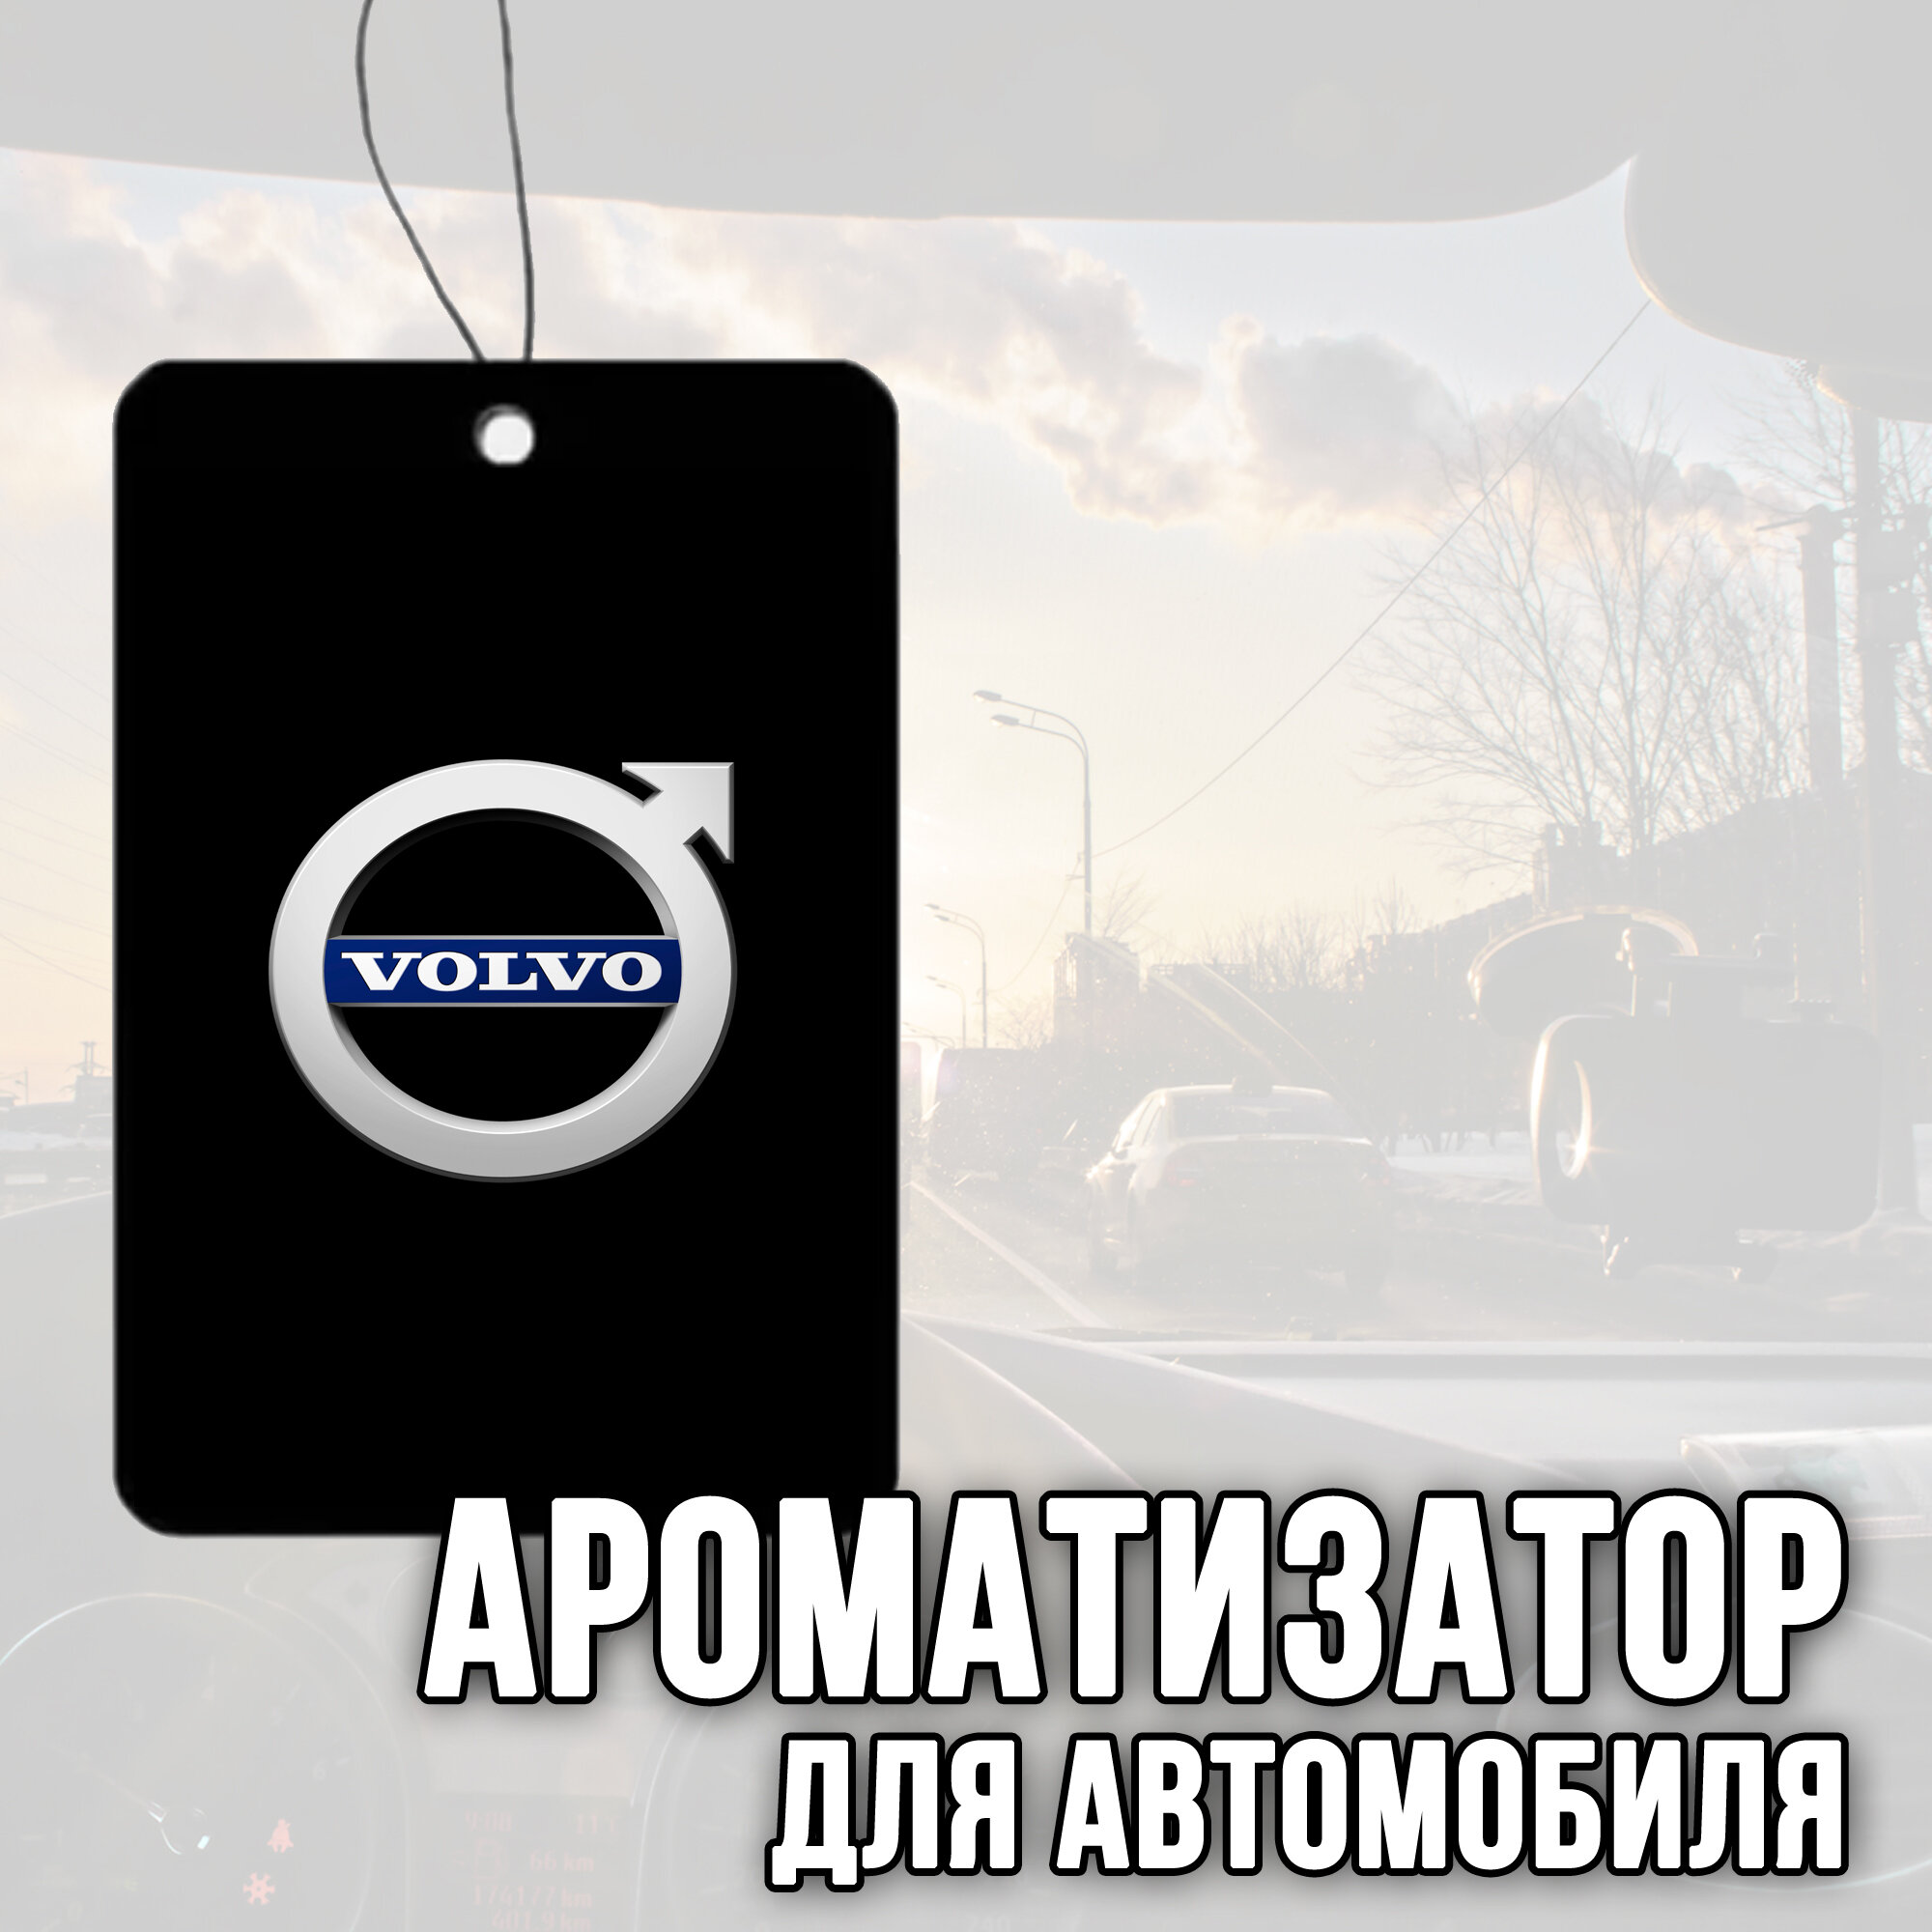 Ароматизатор для автомобиля с логотипом "Volvo" (Вольво)